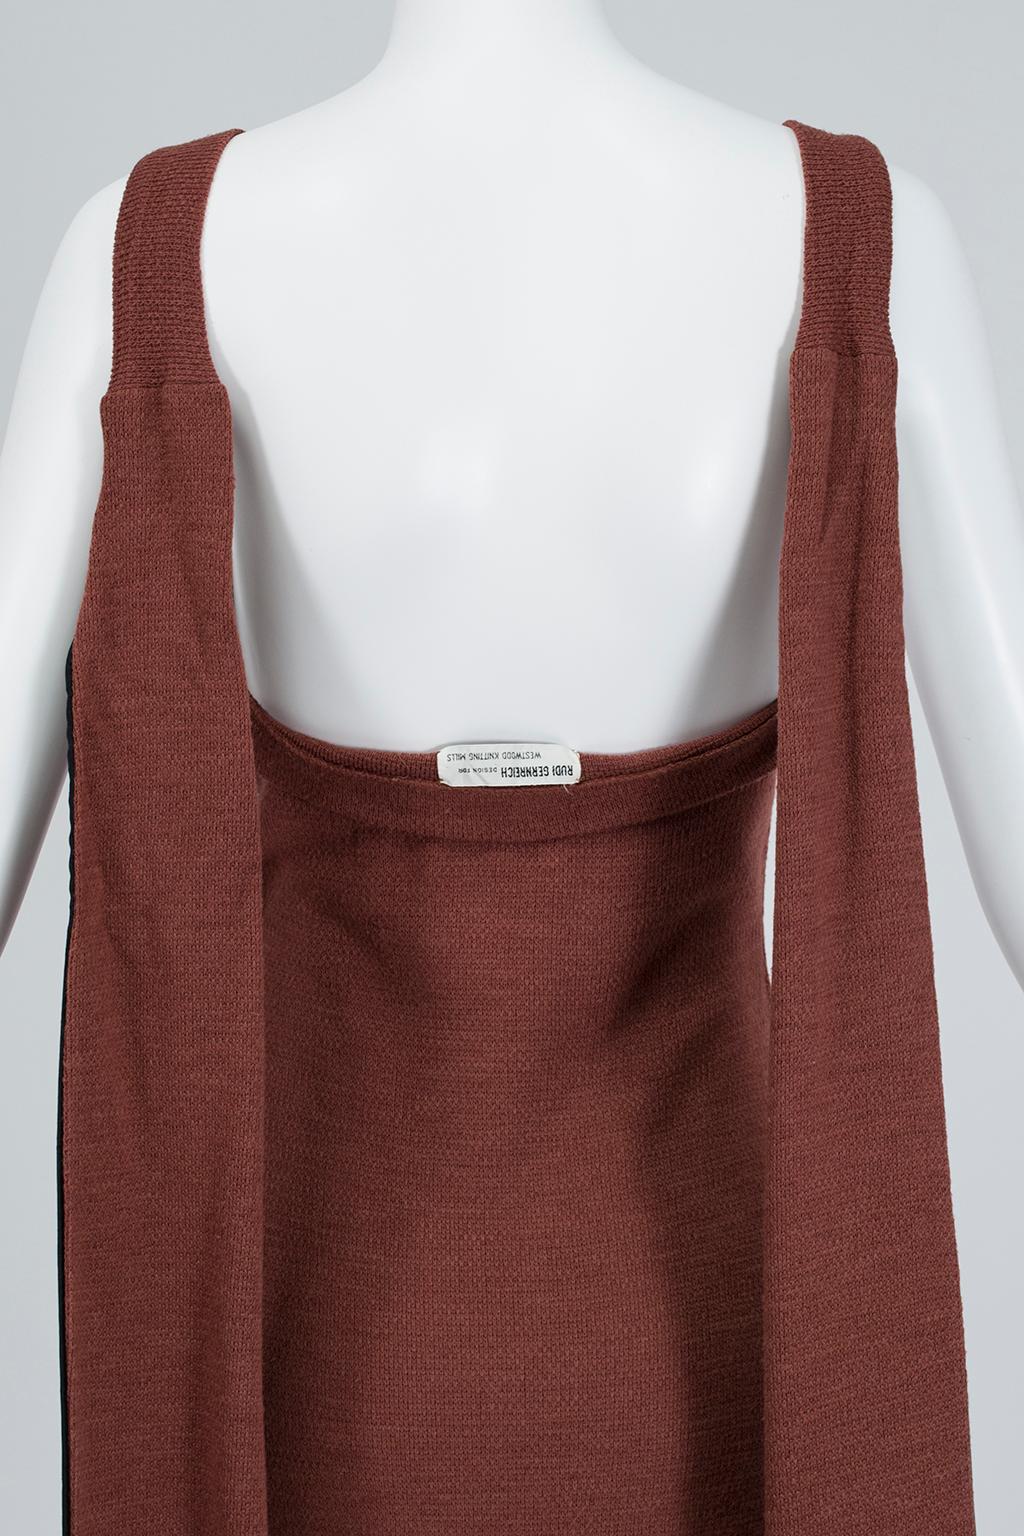 Rudi Gernreich Chestnut Knit Halter Tube Dress with 4’ Sashes - size M, 1960s 3